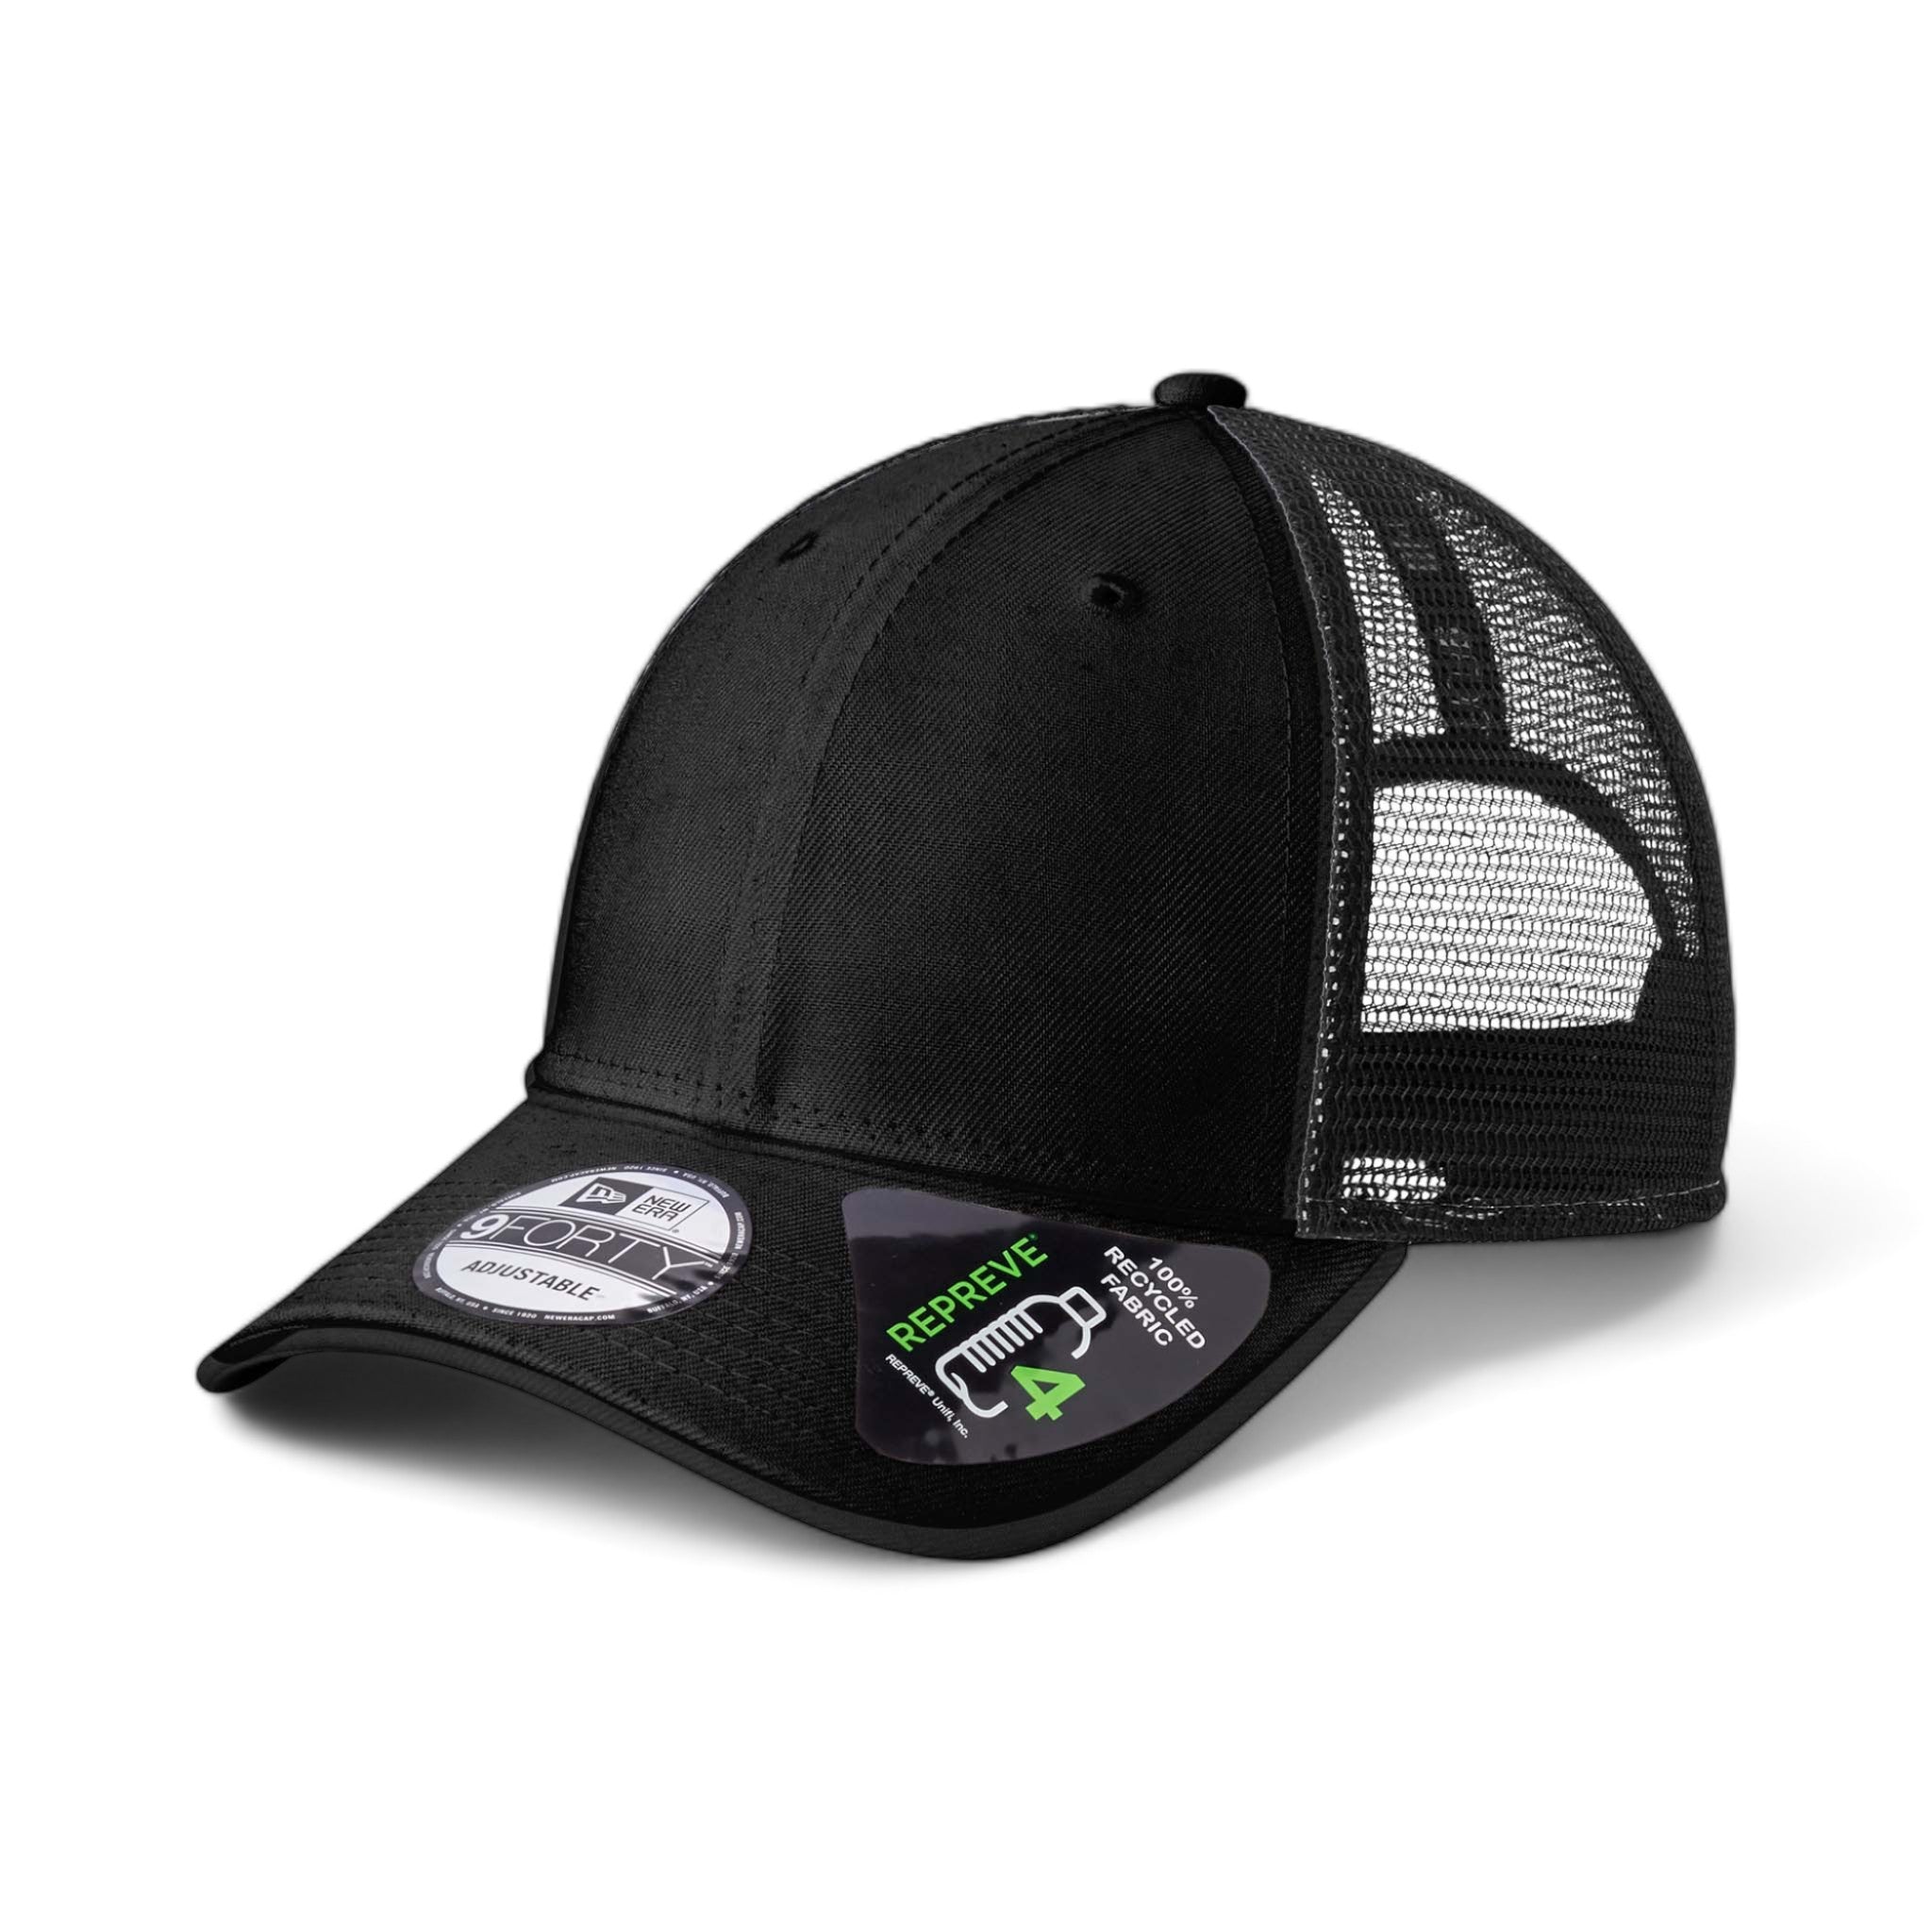 Side view of New Era NE208 custom hat in black